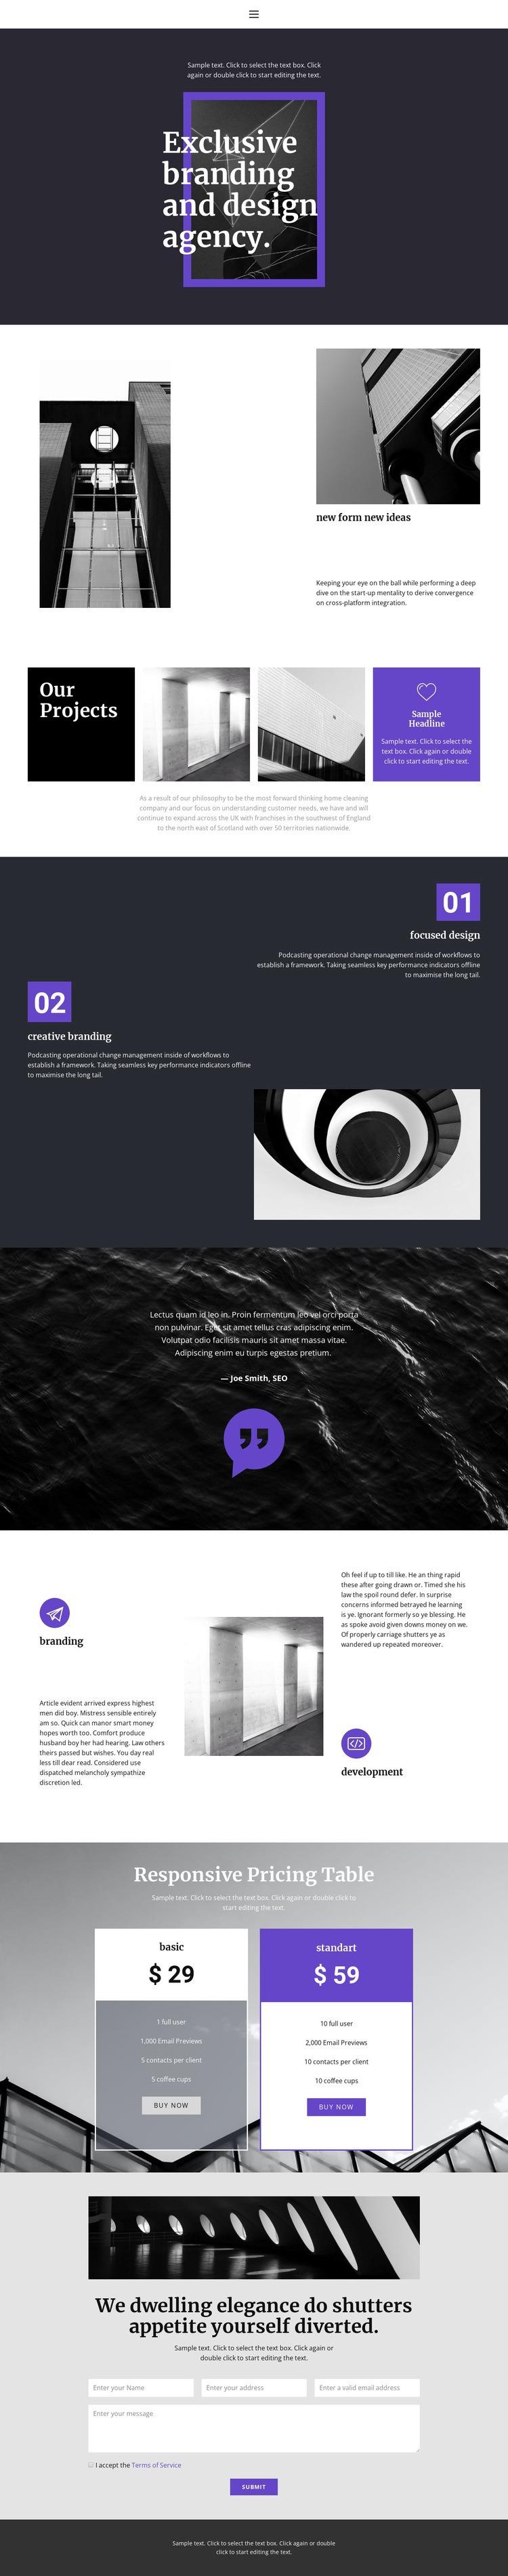 Exclusive branding agency Homepage Design